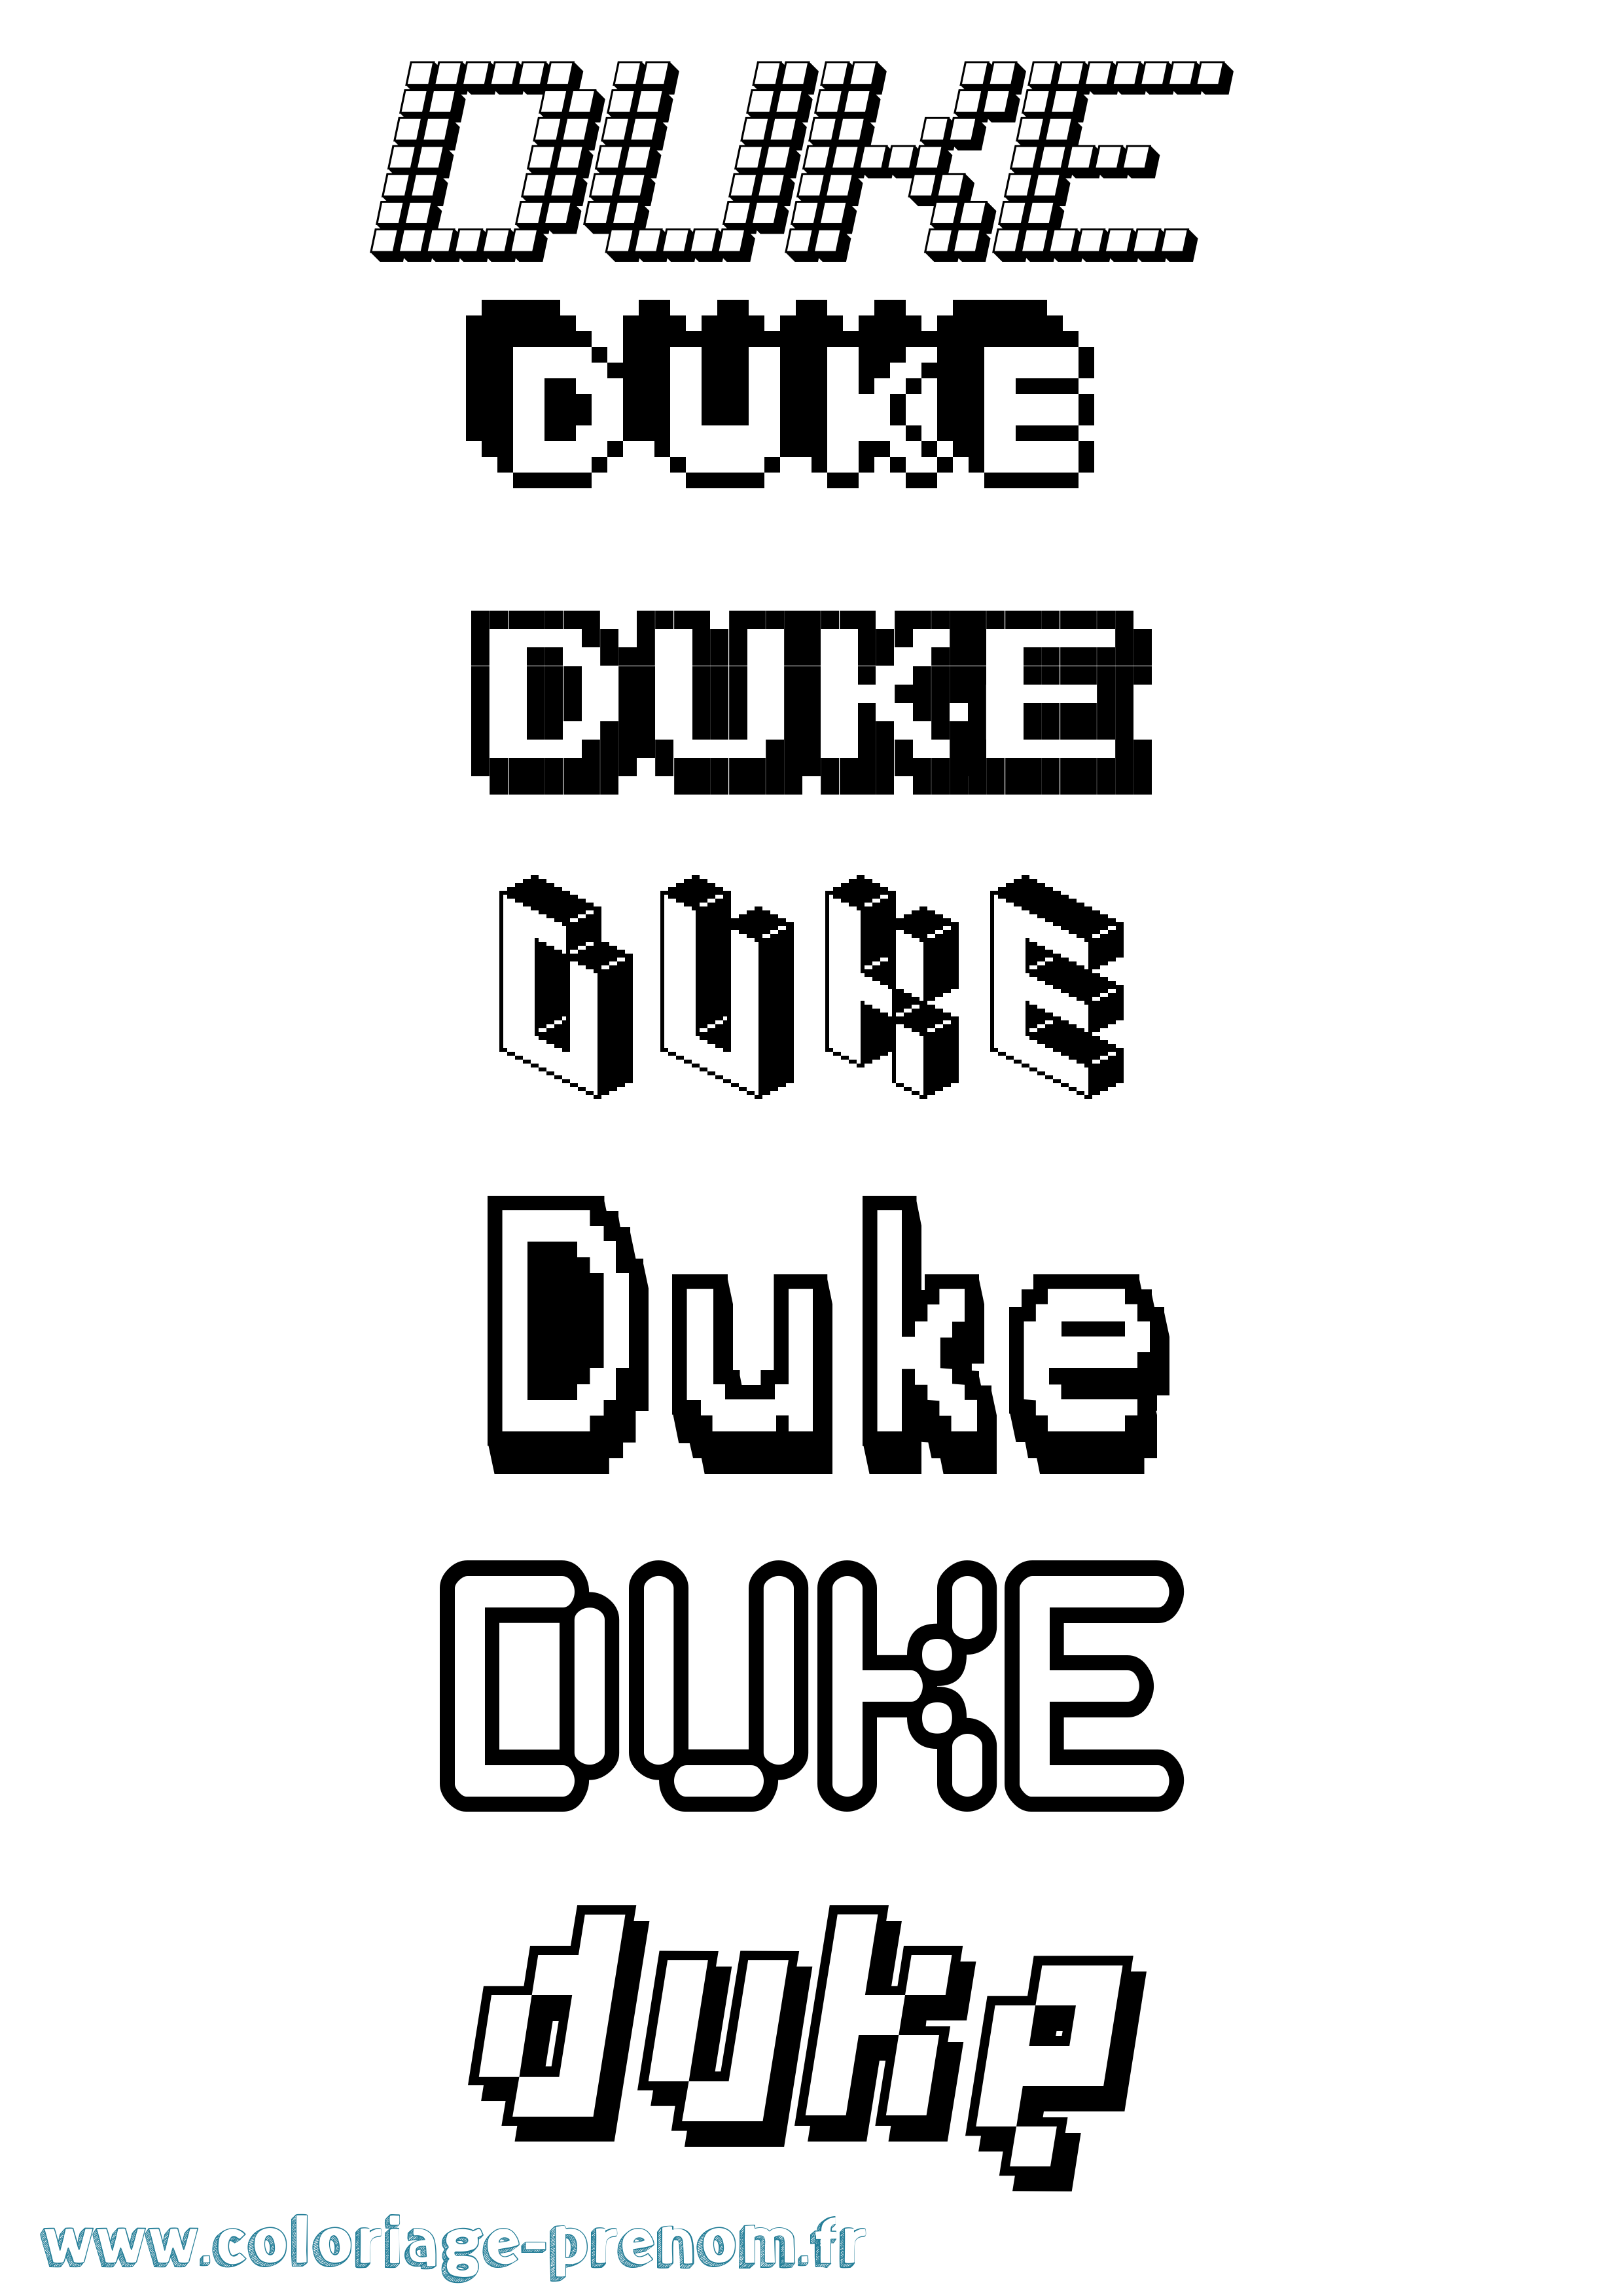 Coloriage prénom Duke Pixel